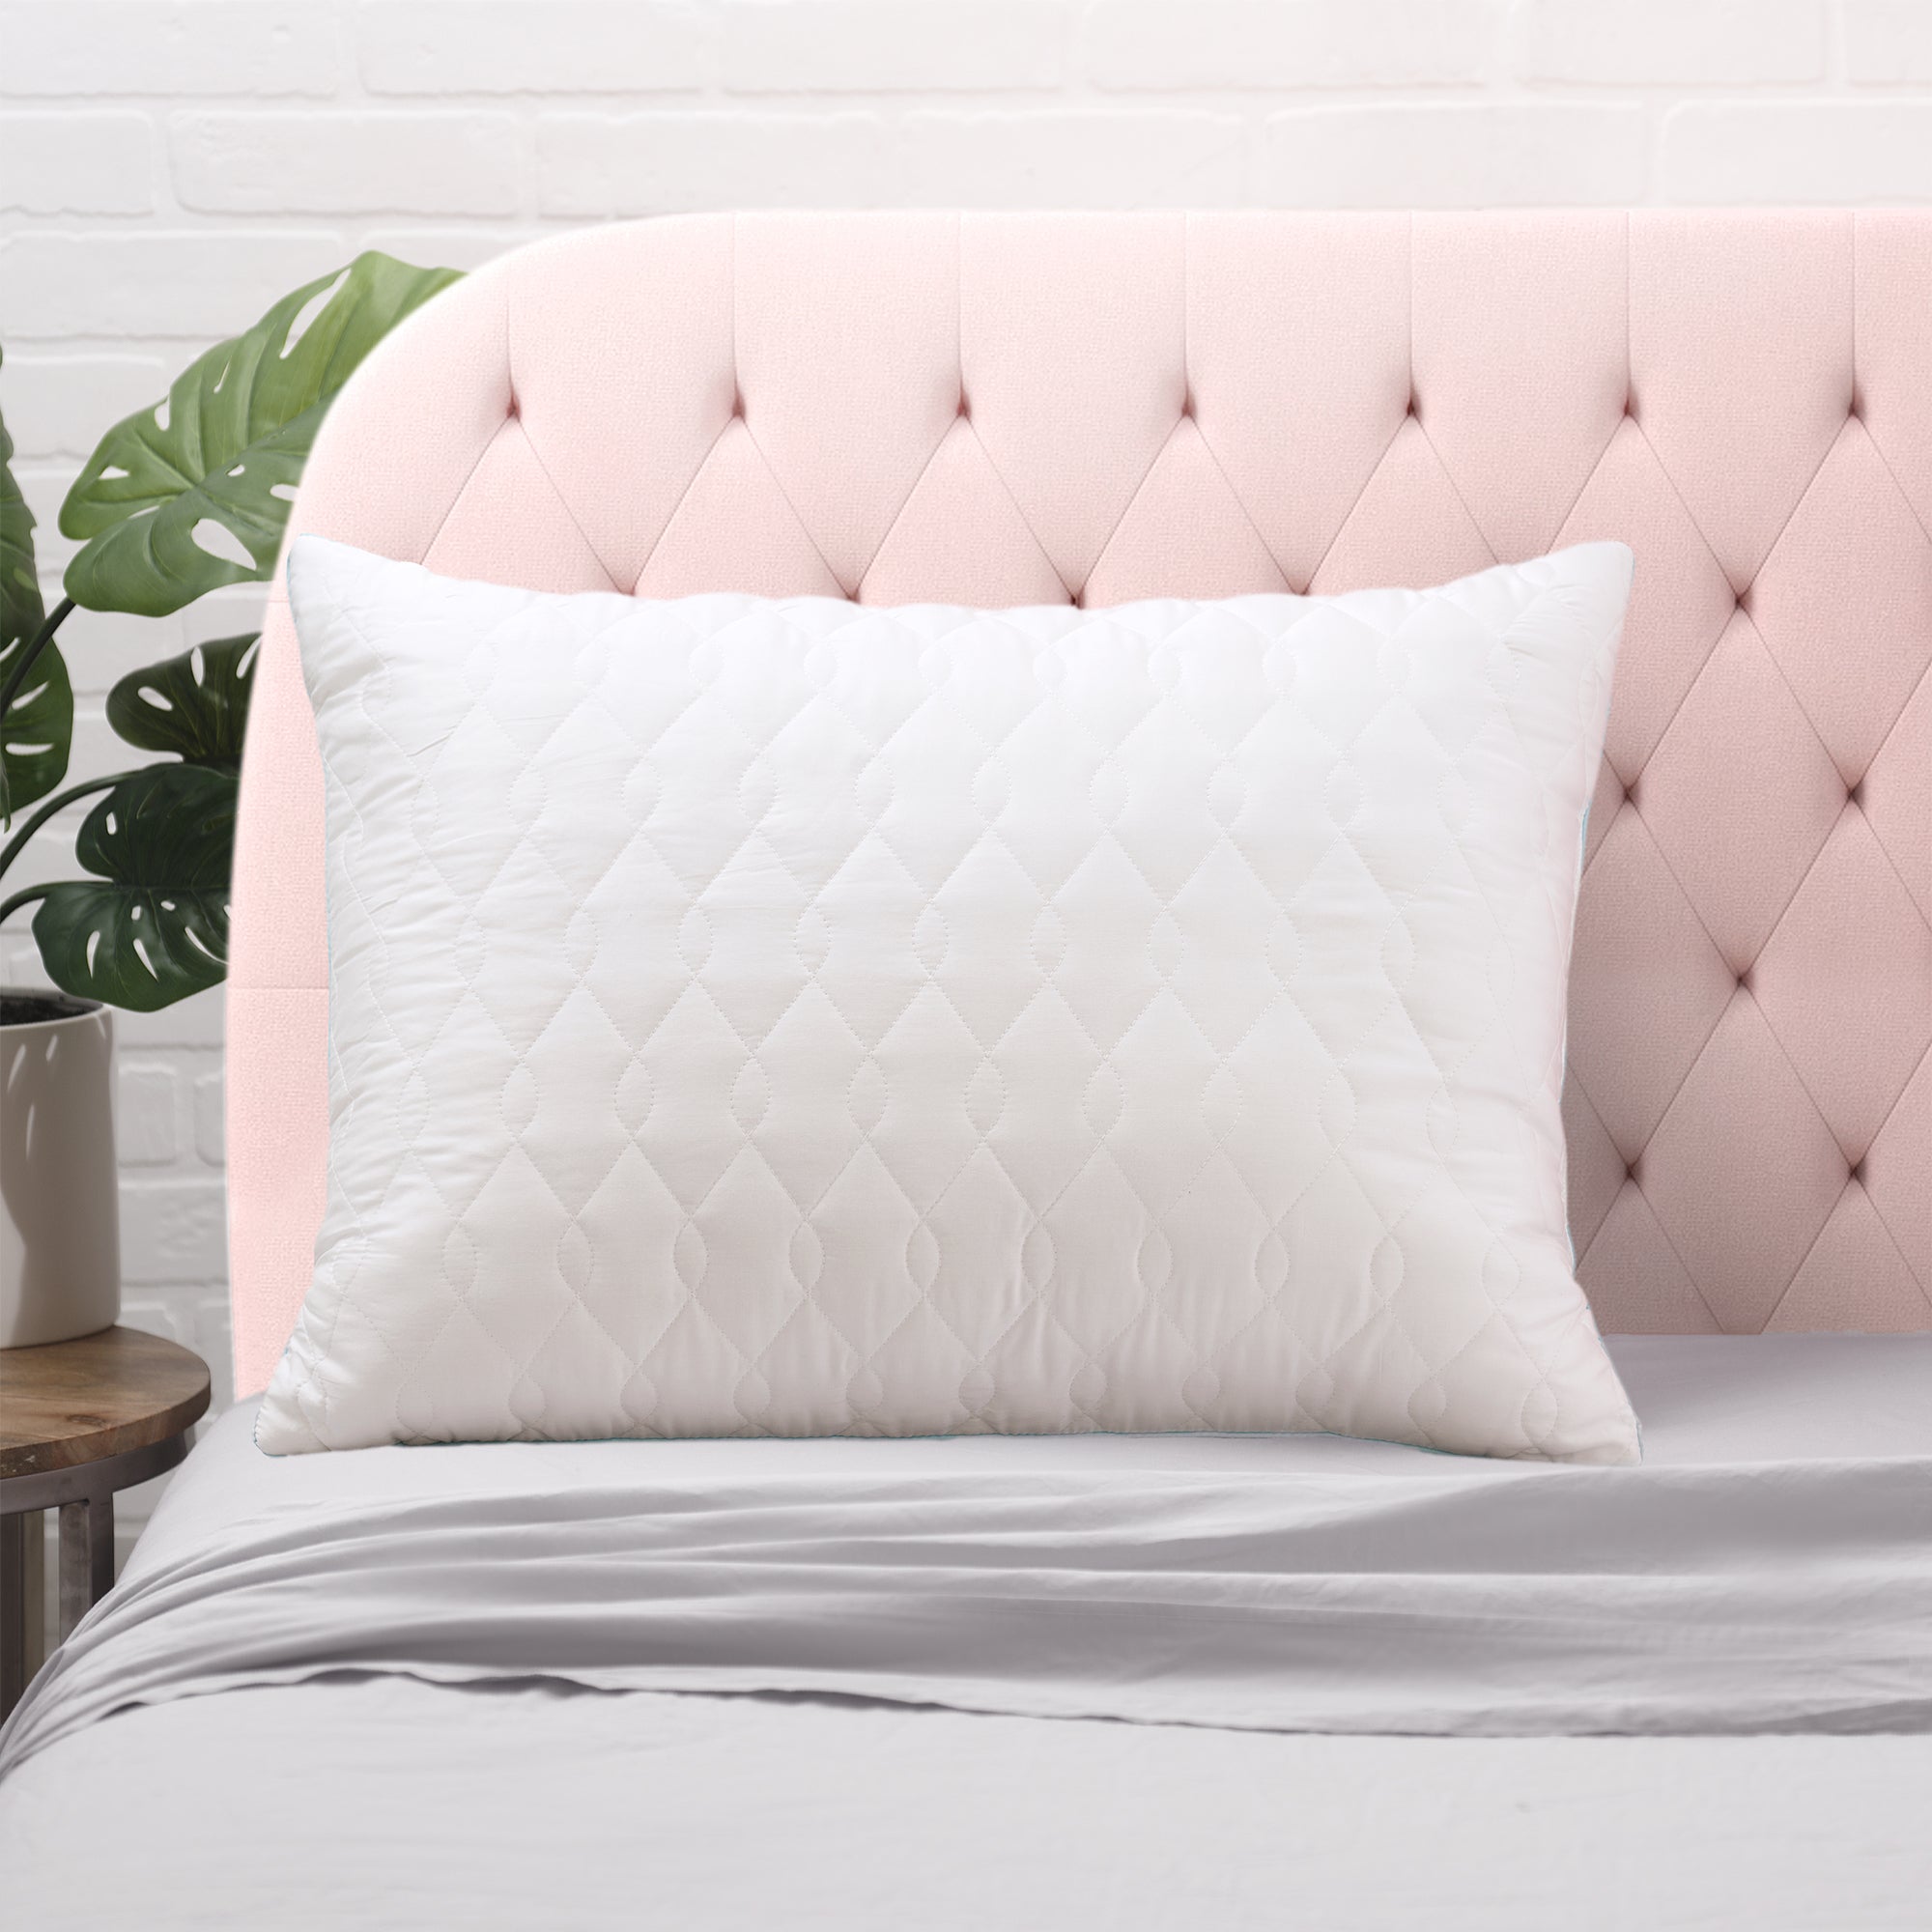 Cosmoliving by Cosmopolitan Eco Sleep Tencel Pillow